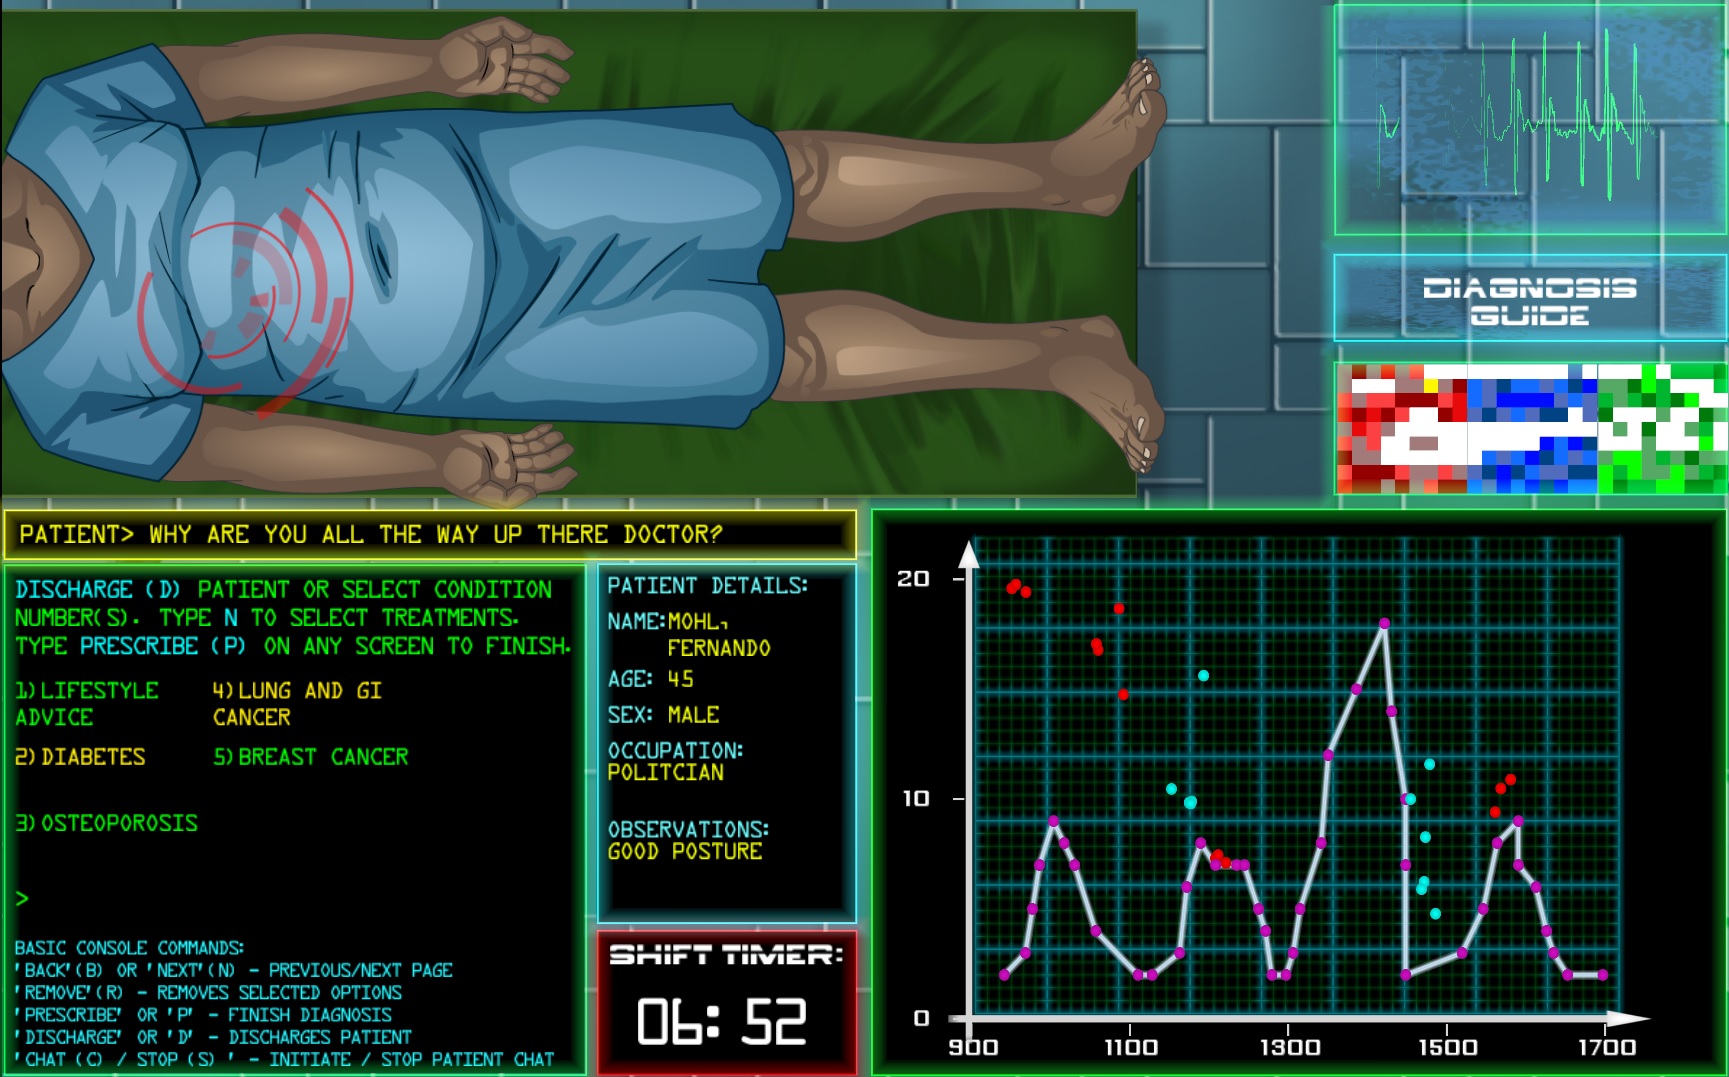 Discharge игра. Discharge a Patient. Rad Science game. Patient details. Game s starting